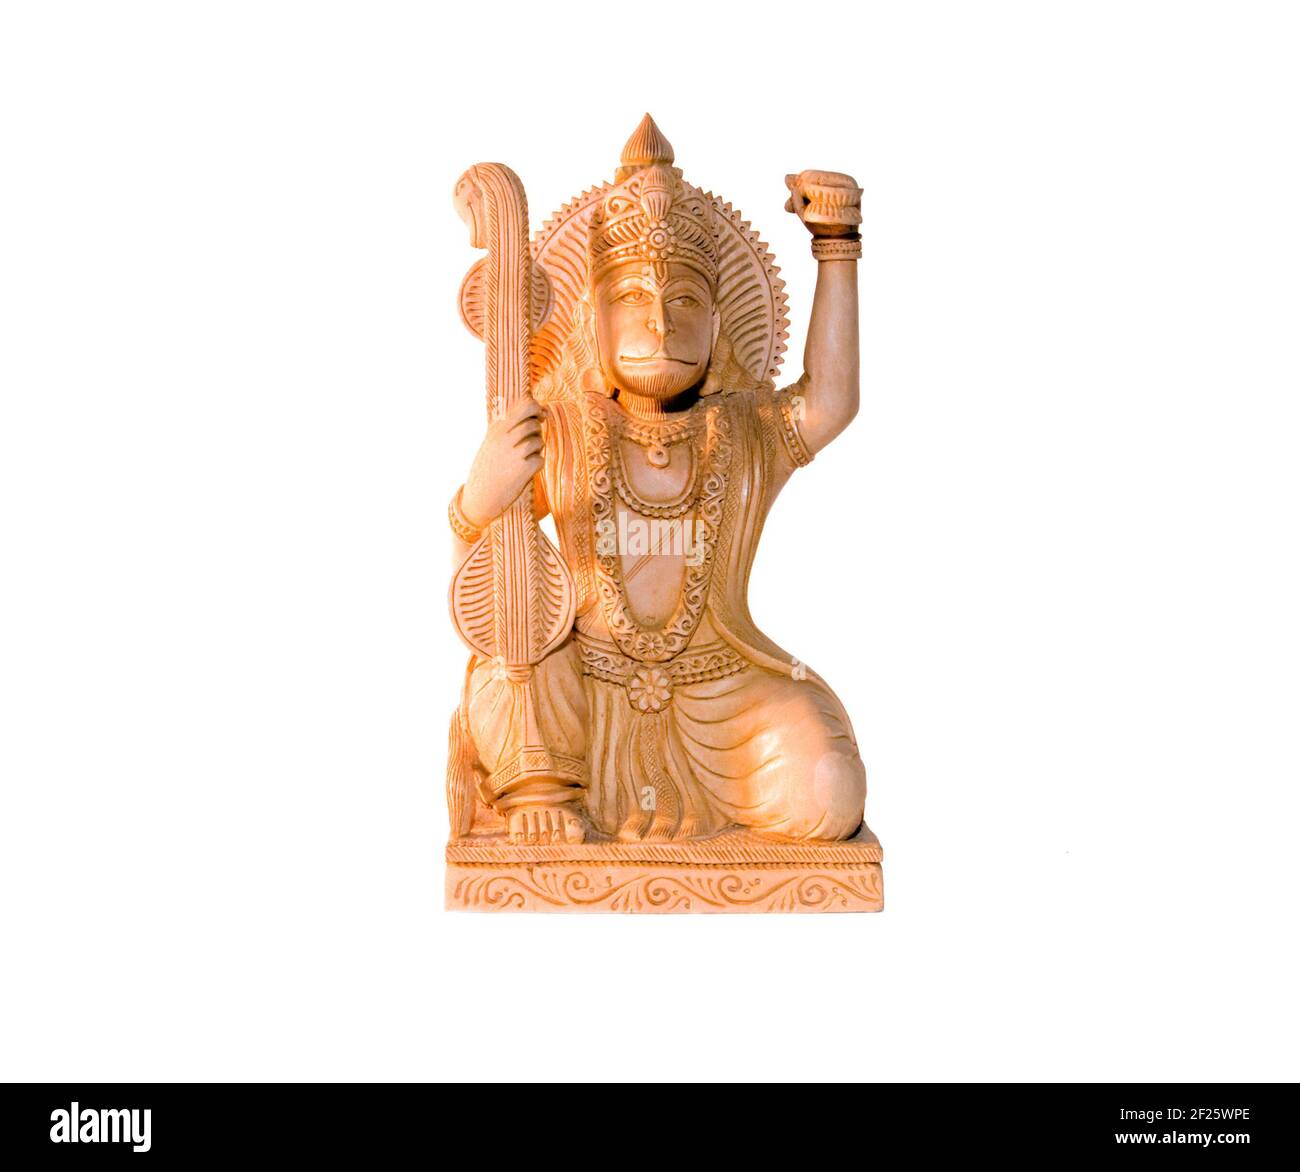 Deity of Hanuman from India on white background Stock Photo - Alamy